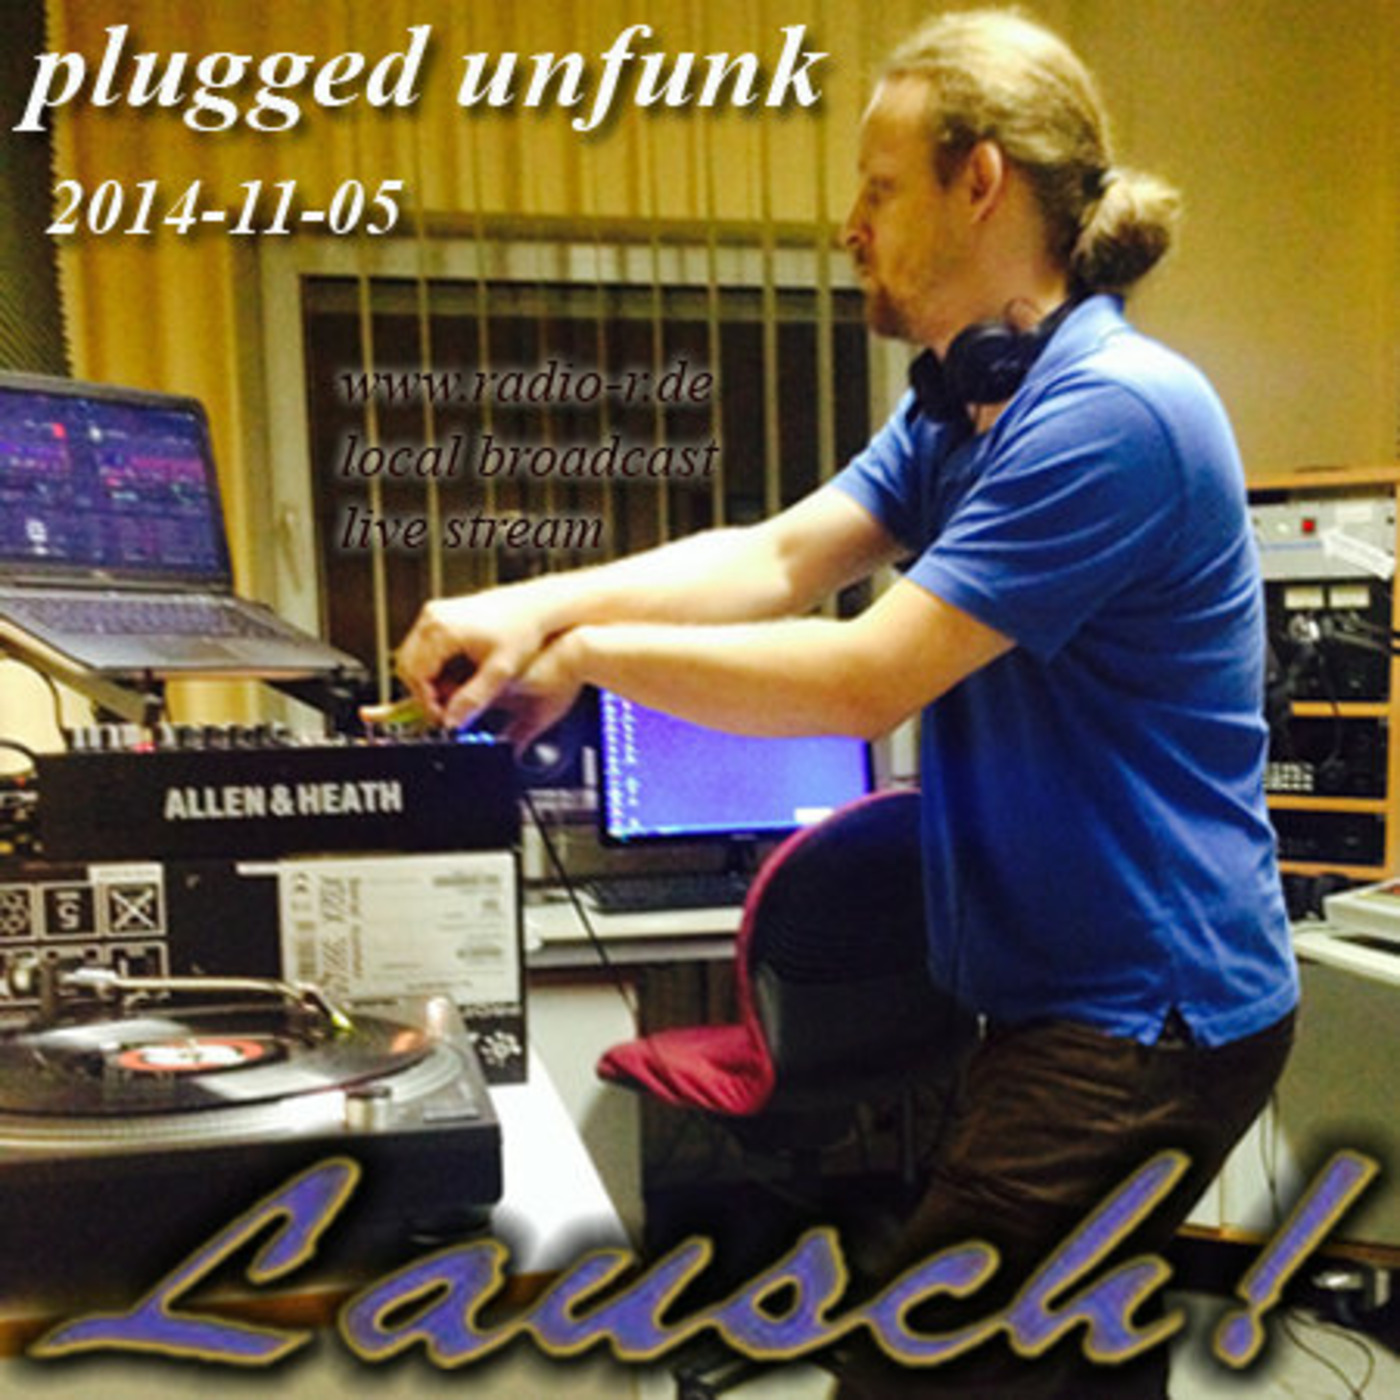 Lausch! @ plugged unfunk (14-11-05)